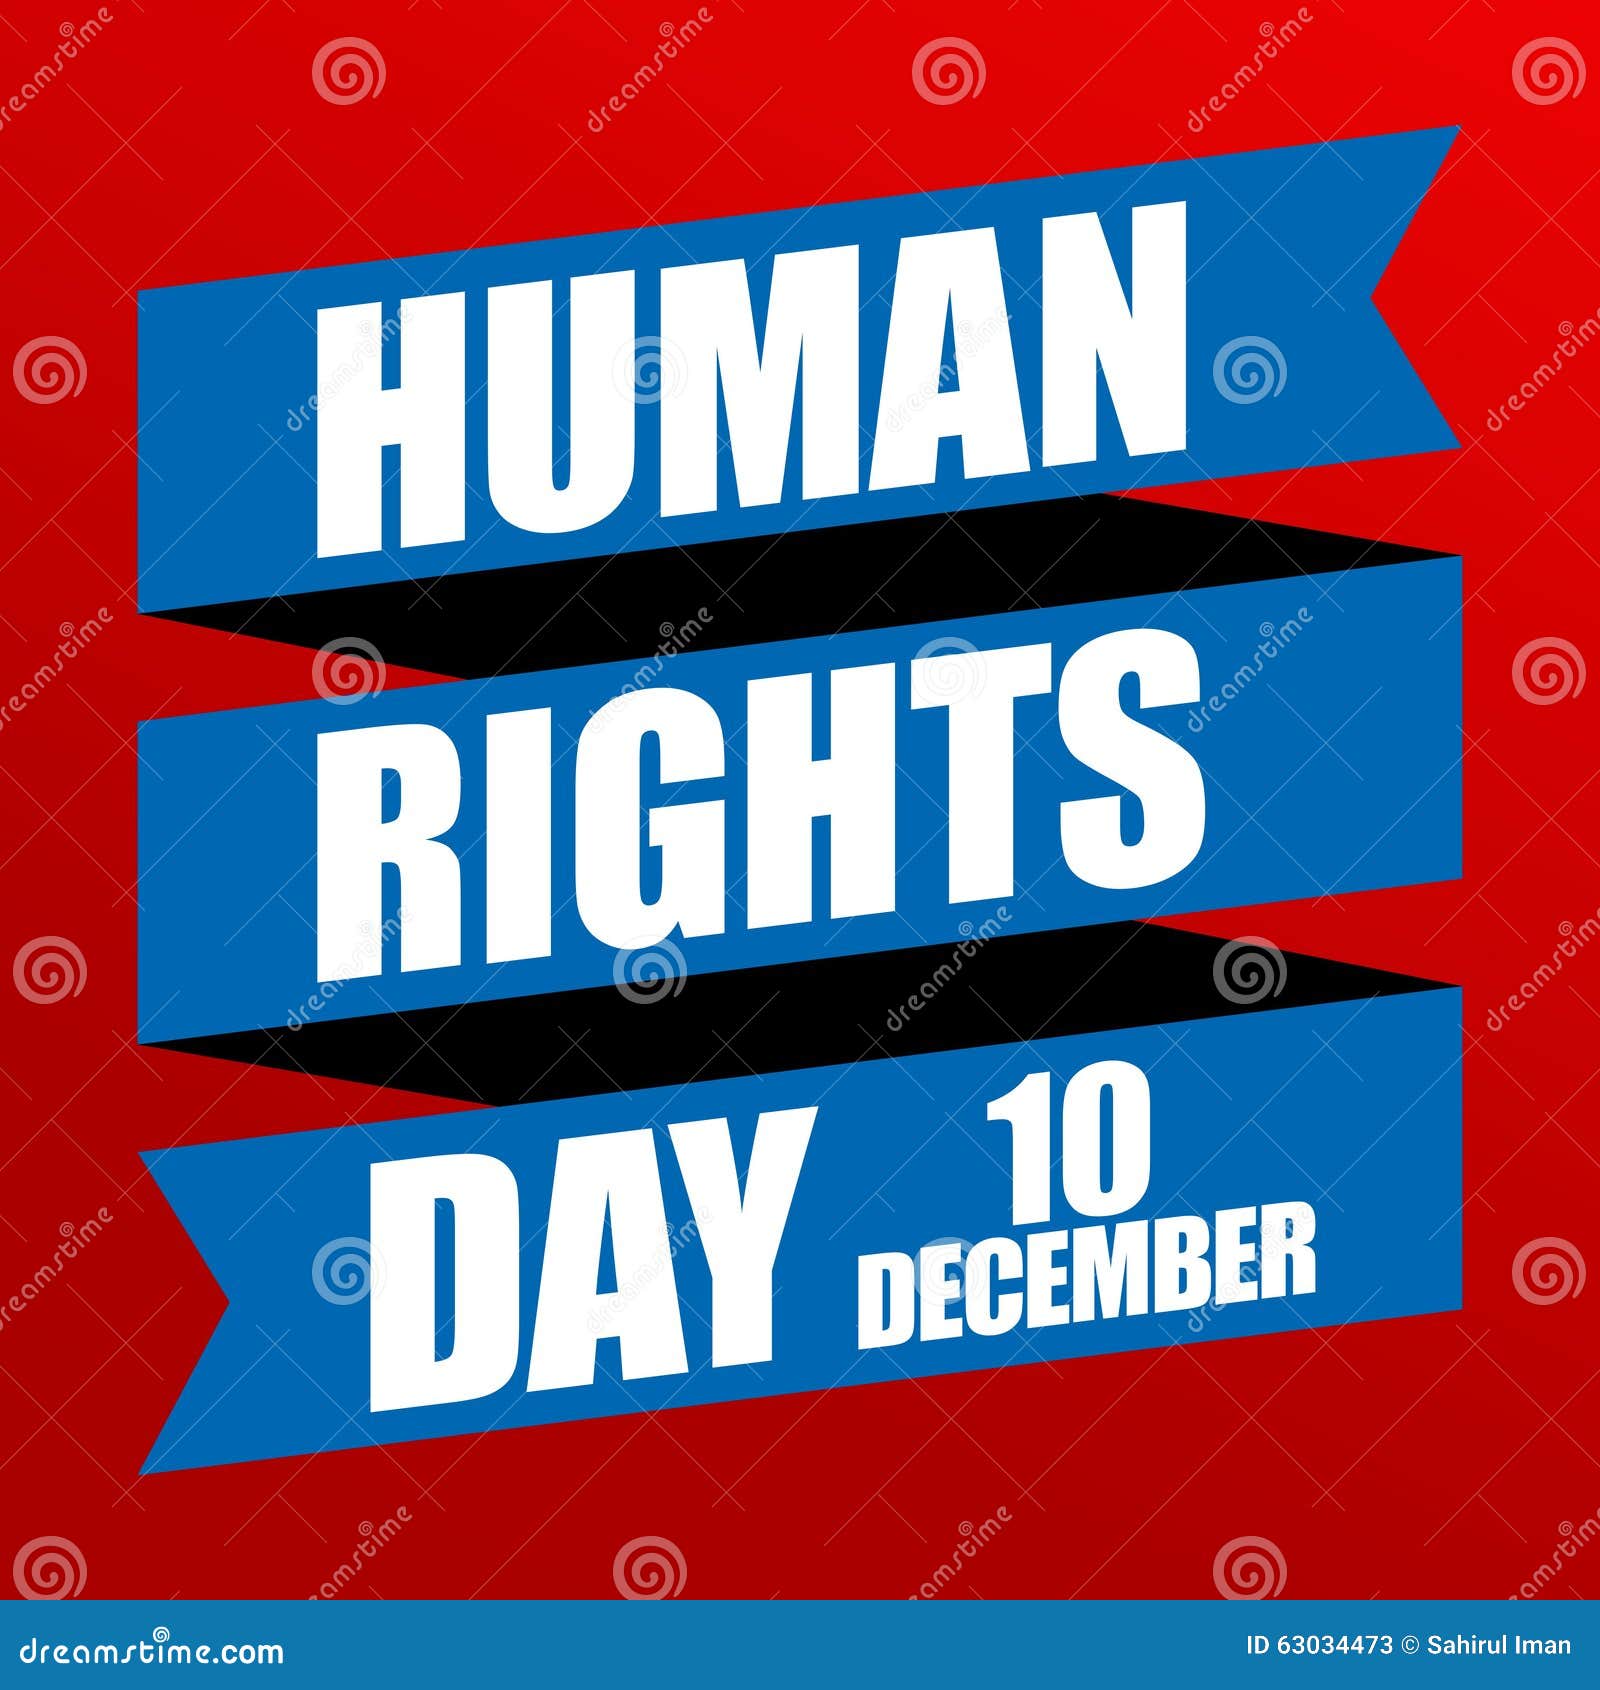 clip art human rights - photo #18